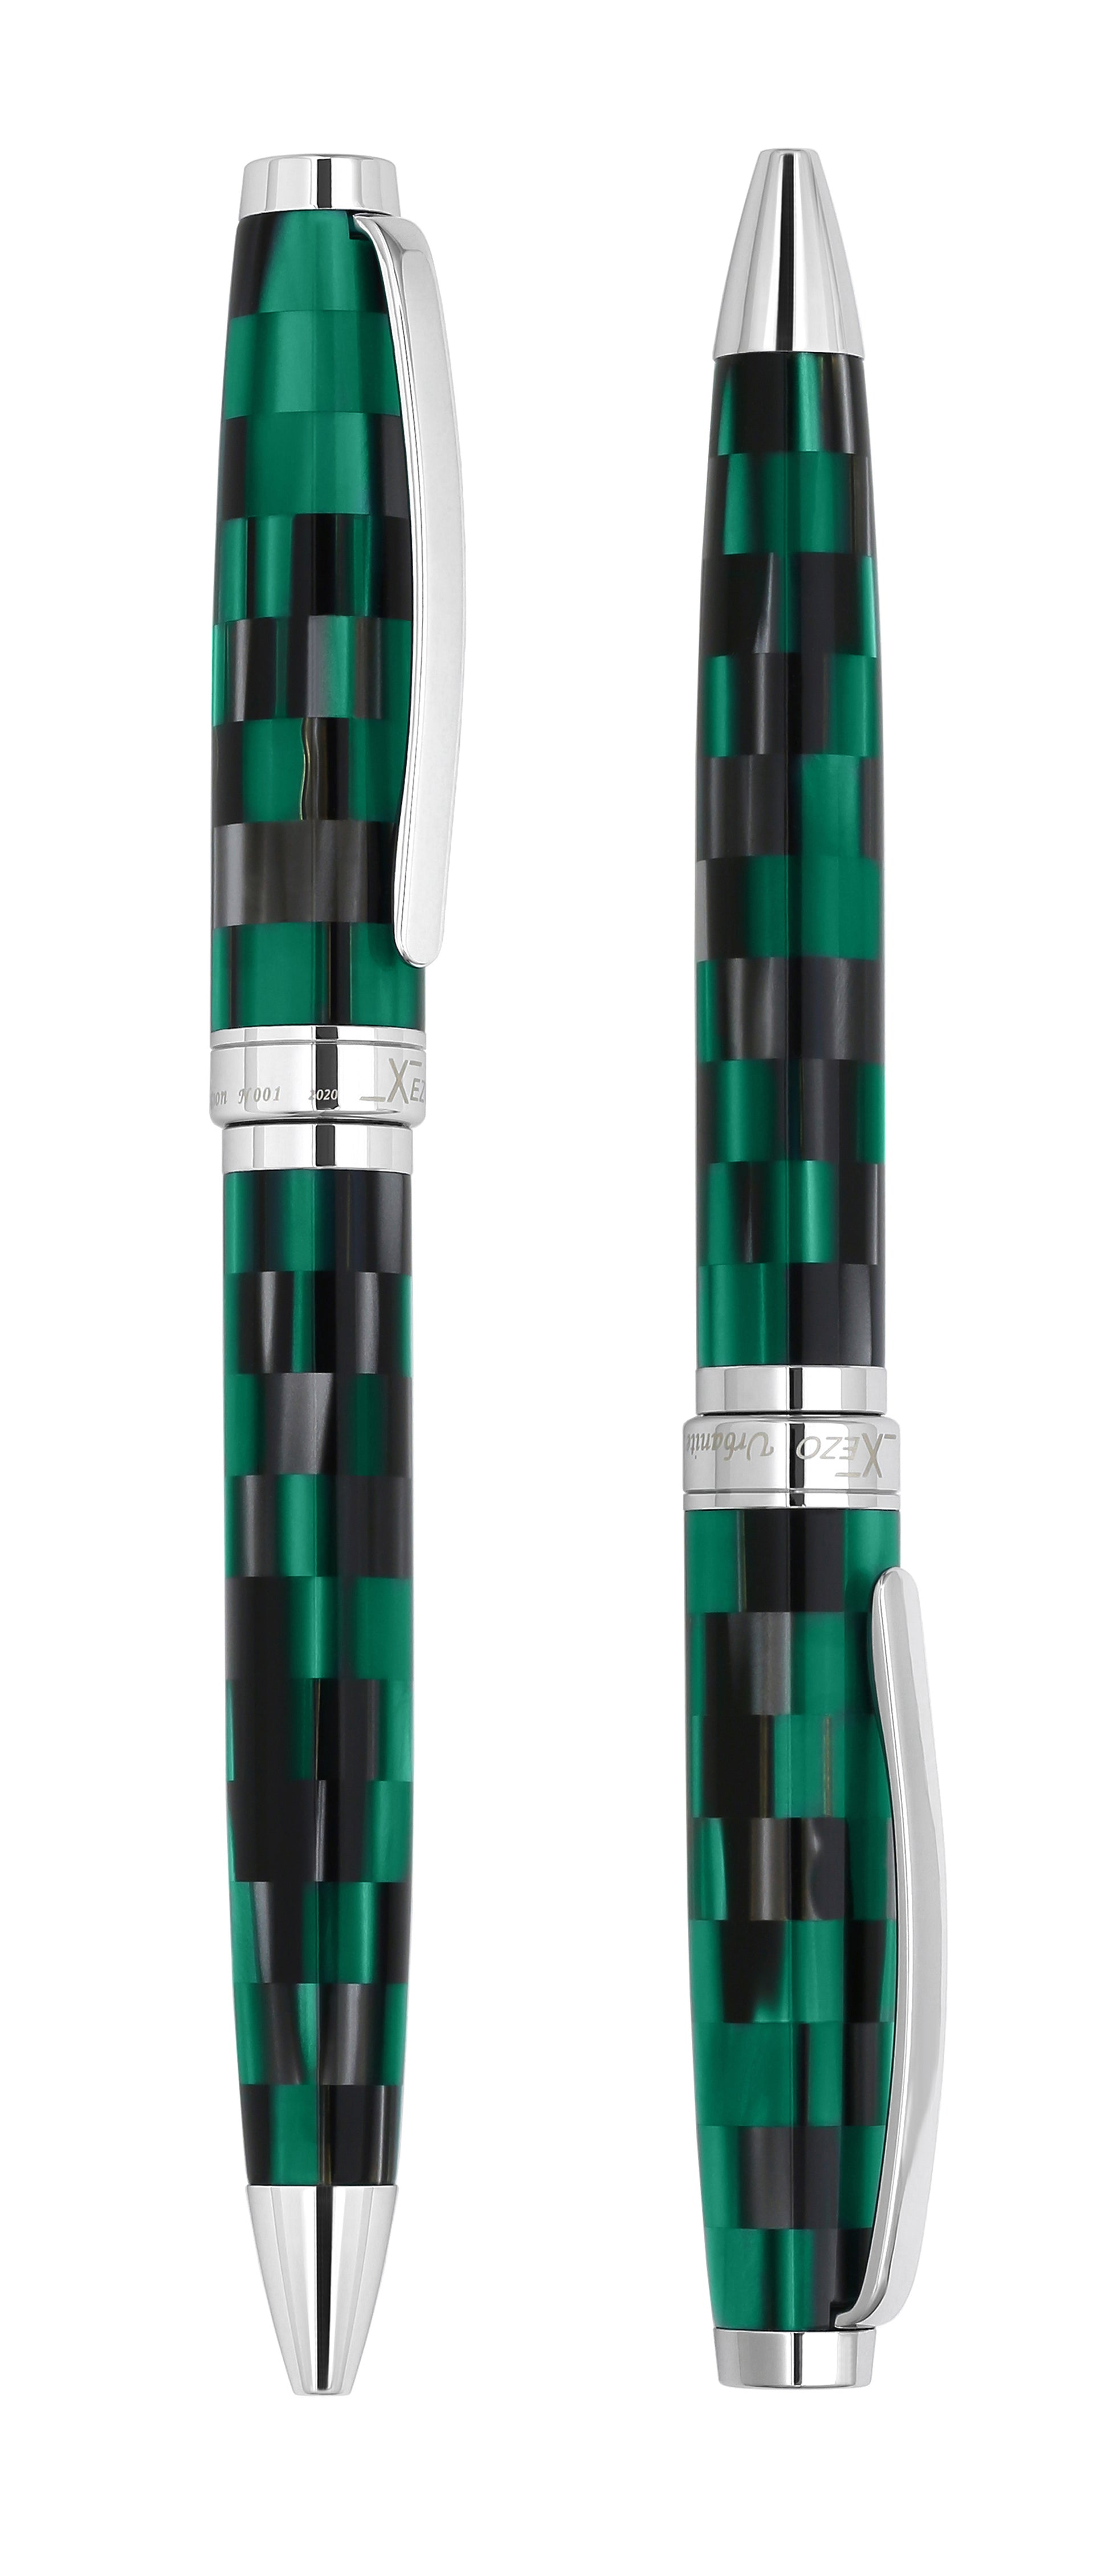 Xezo - Two Urbanite II Ocean B ballpoint pens